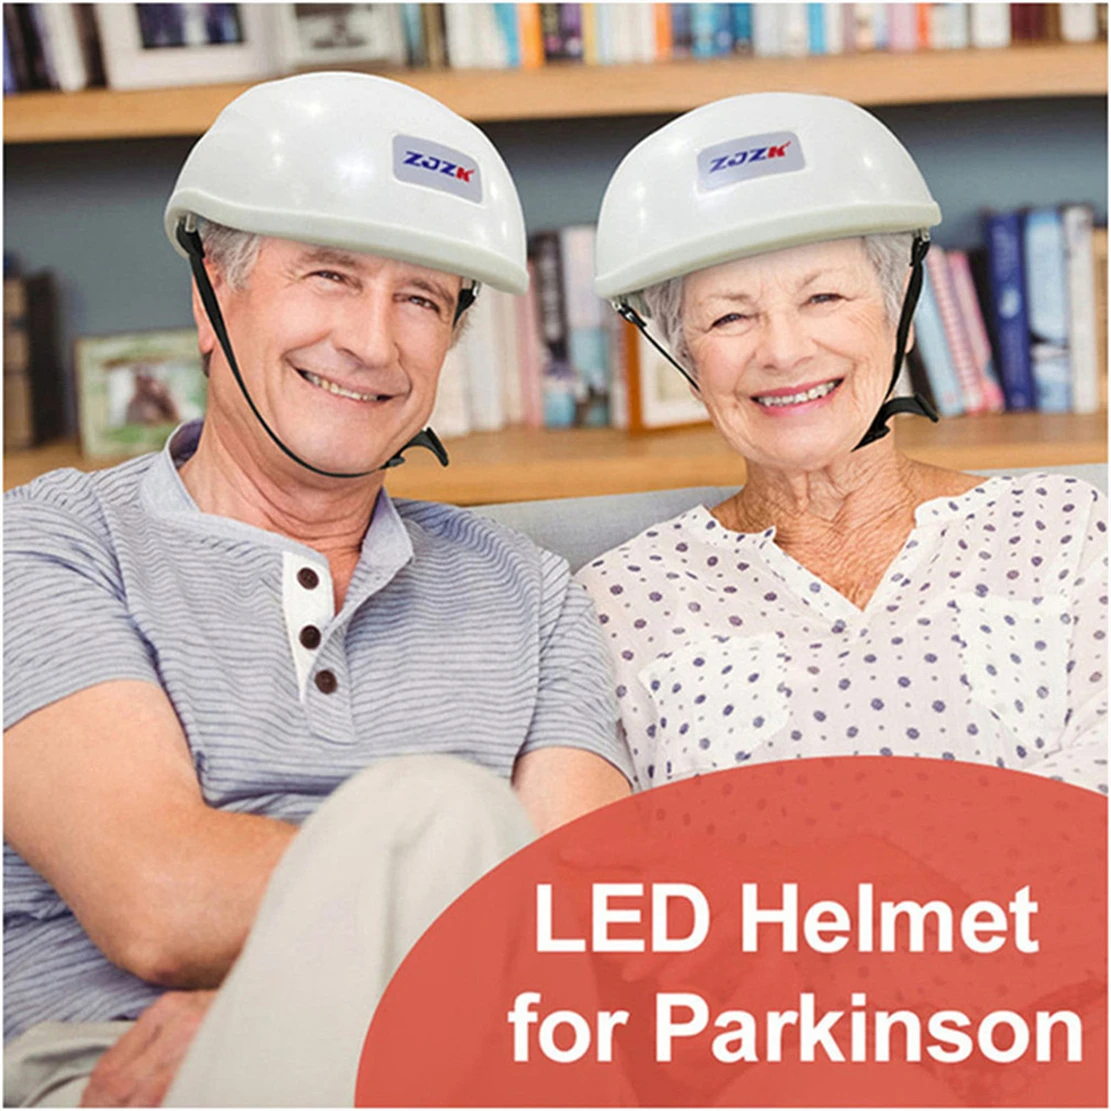 

ZJZK 810nm Cap Photobiomodulation Helmet Natural Treatment for Parkinson Parkinsons Gifts for Men Parkinson Device Health Care